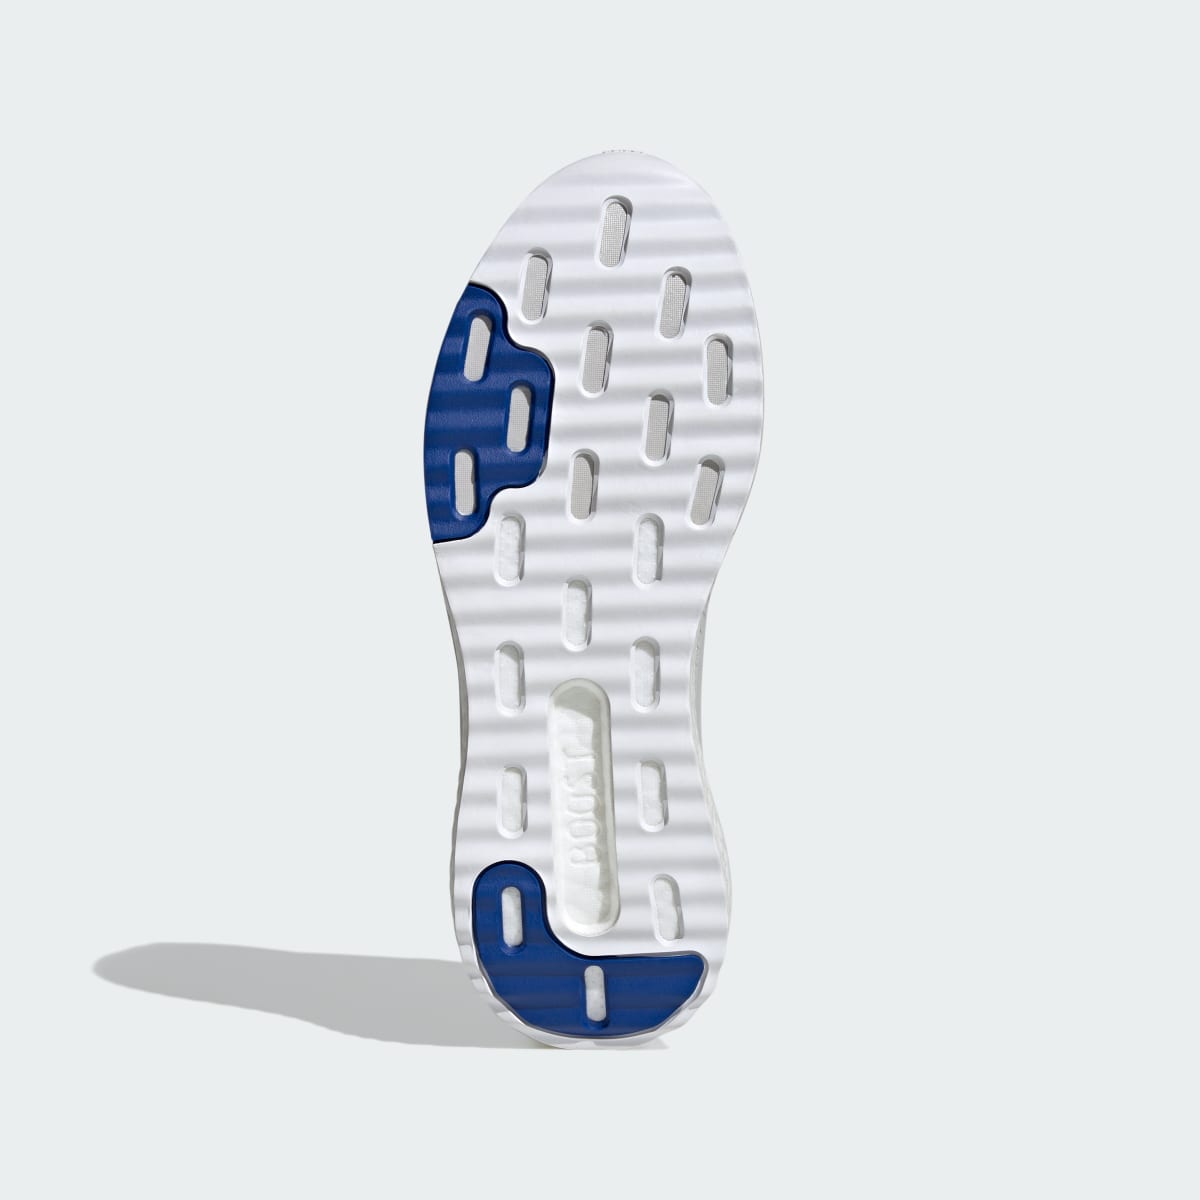 Adidas X_PLPHASE Ayakkabı. 5